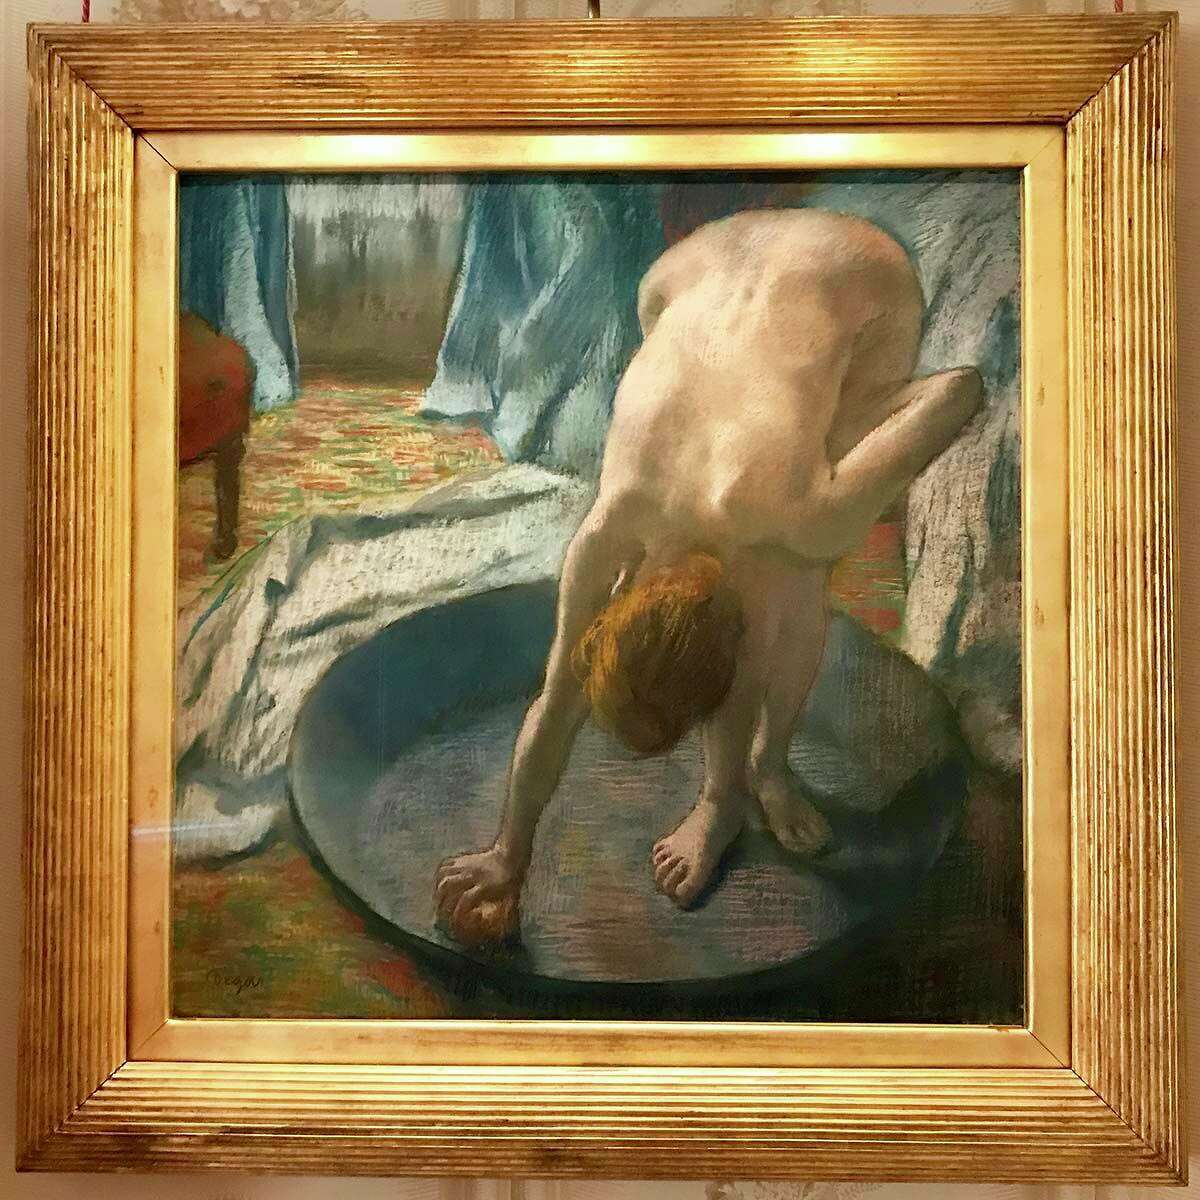 Edgar Degas, The Tub, 1886